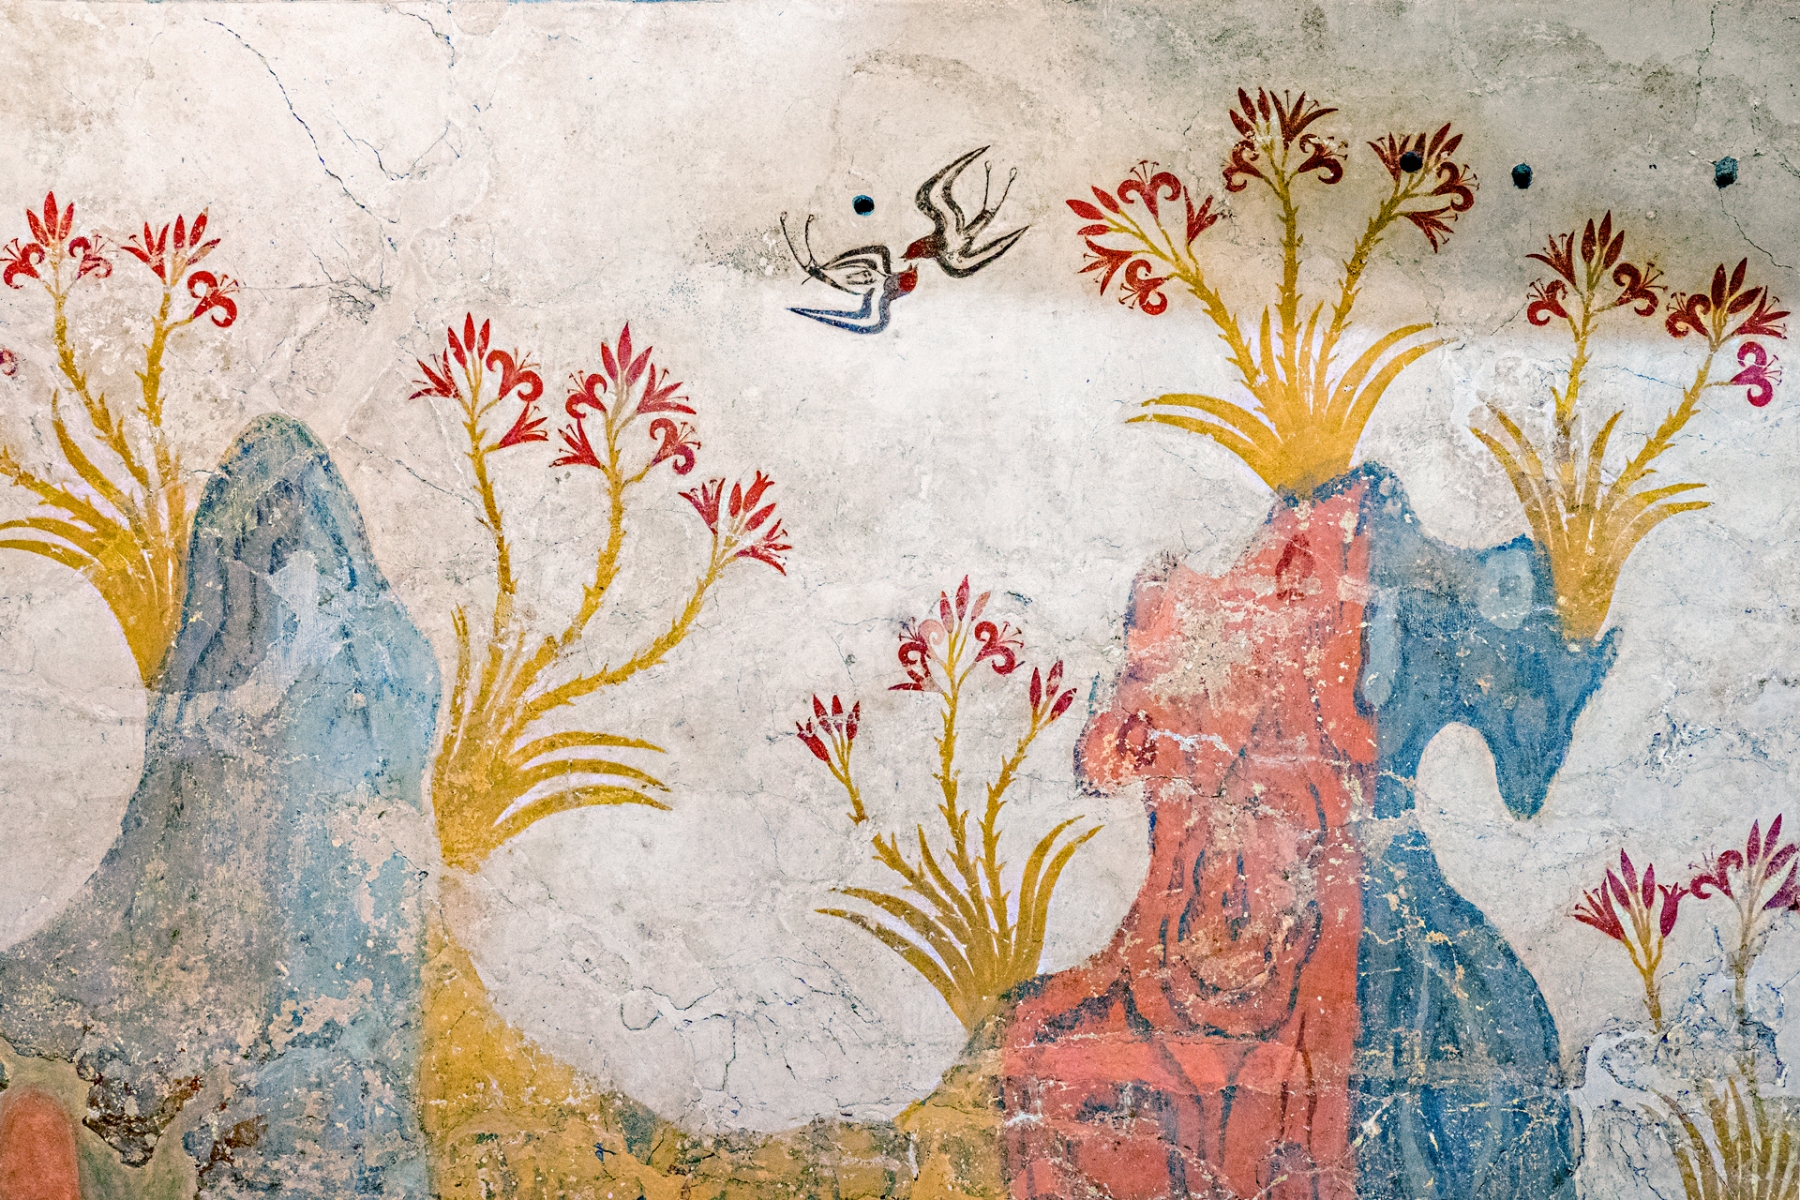 Cycladic Fresco (National Archeological Museum, Athens)